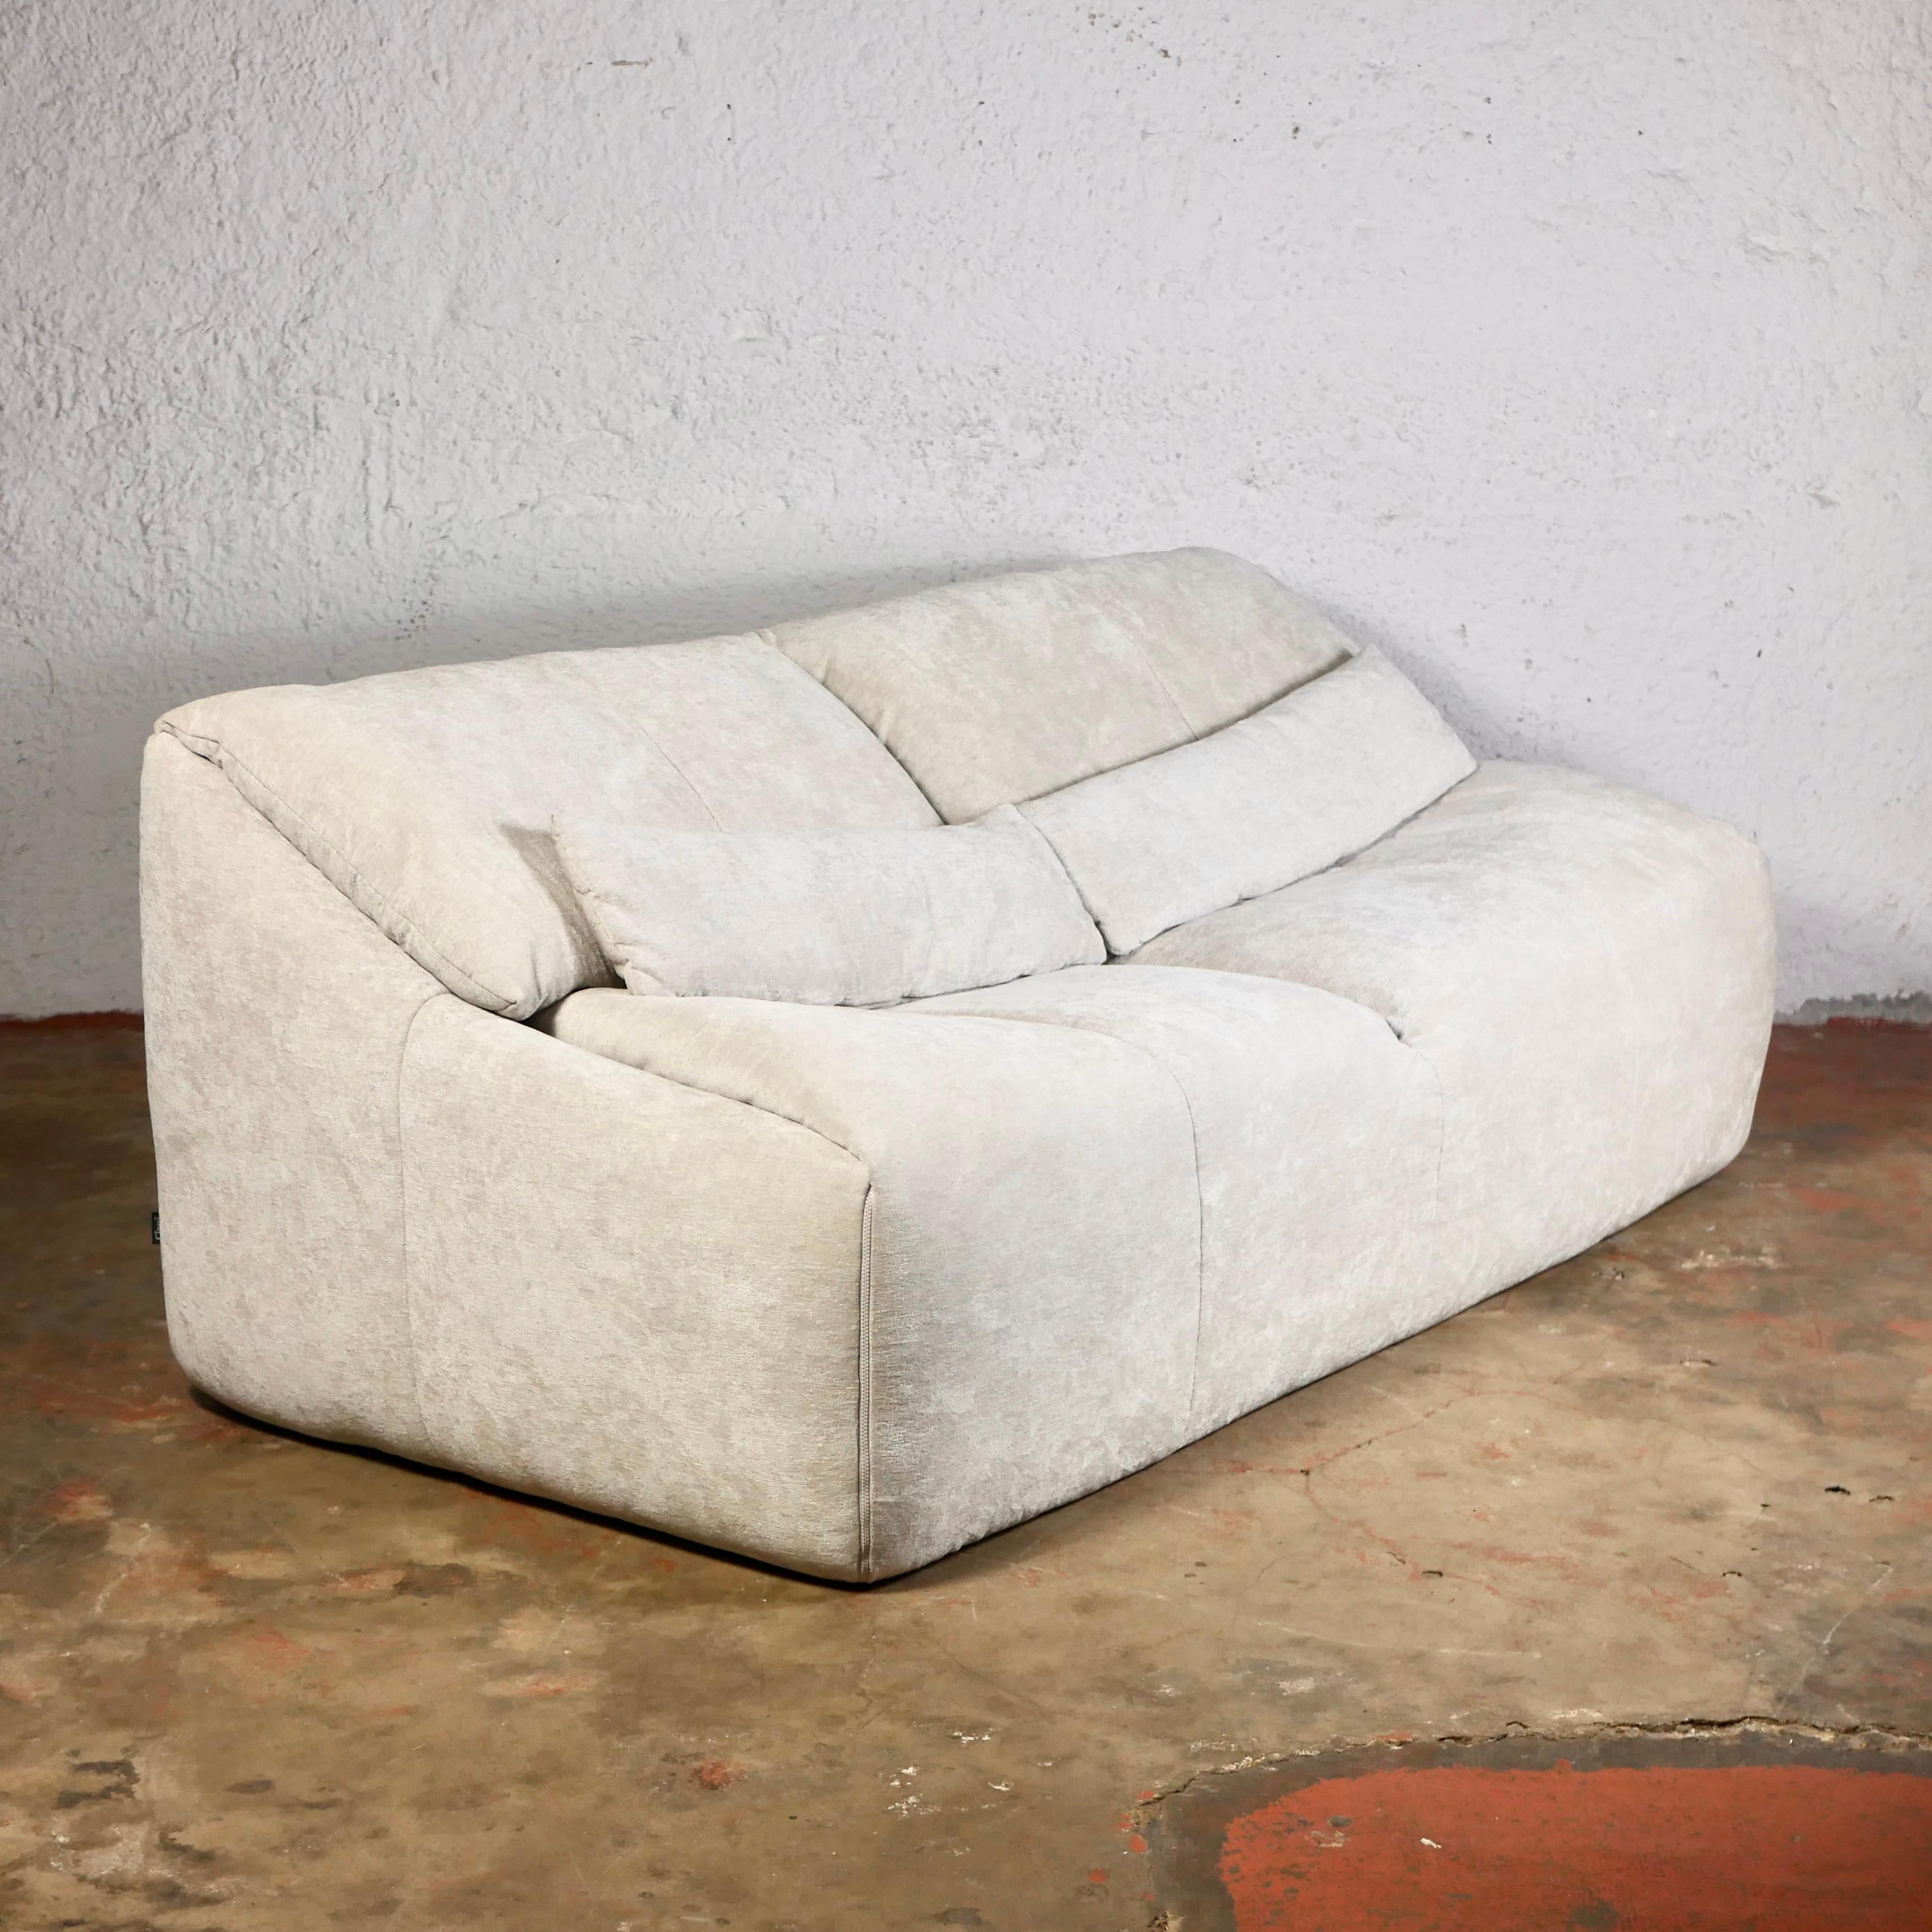 French Plumy sofa by Annie Hiéronimus for Cinna, 2017 edition